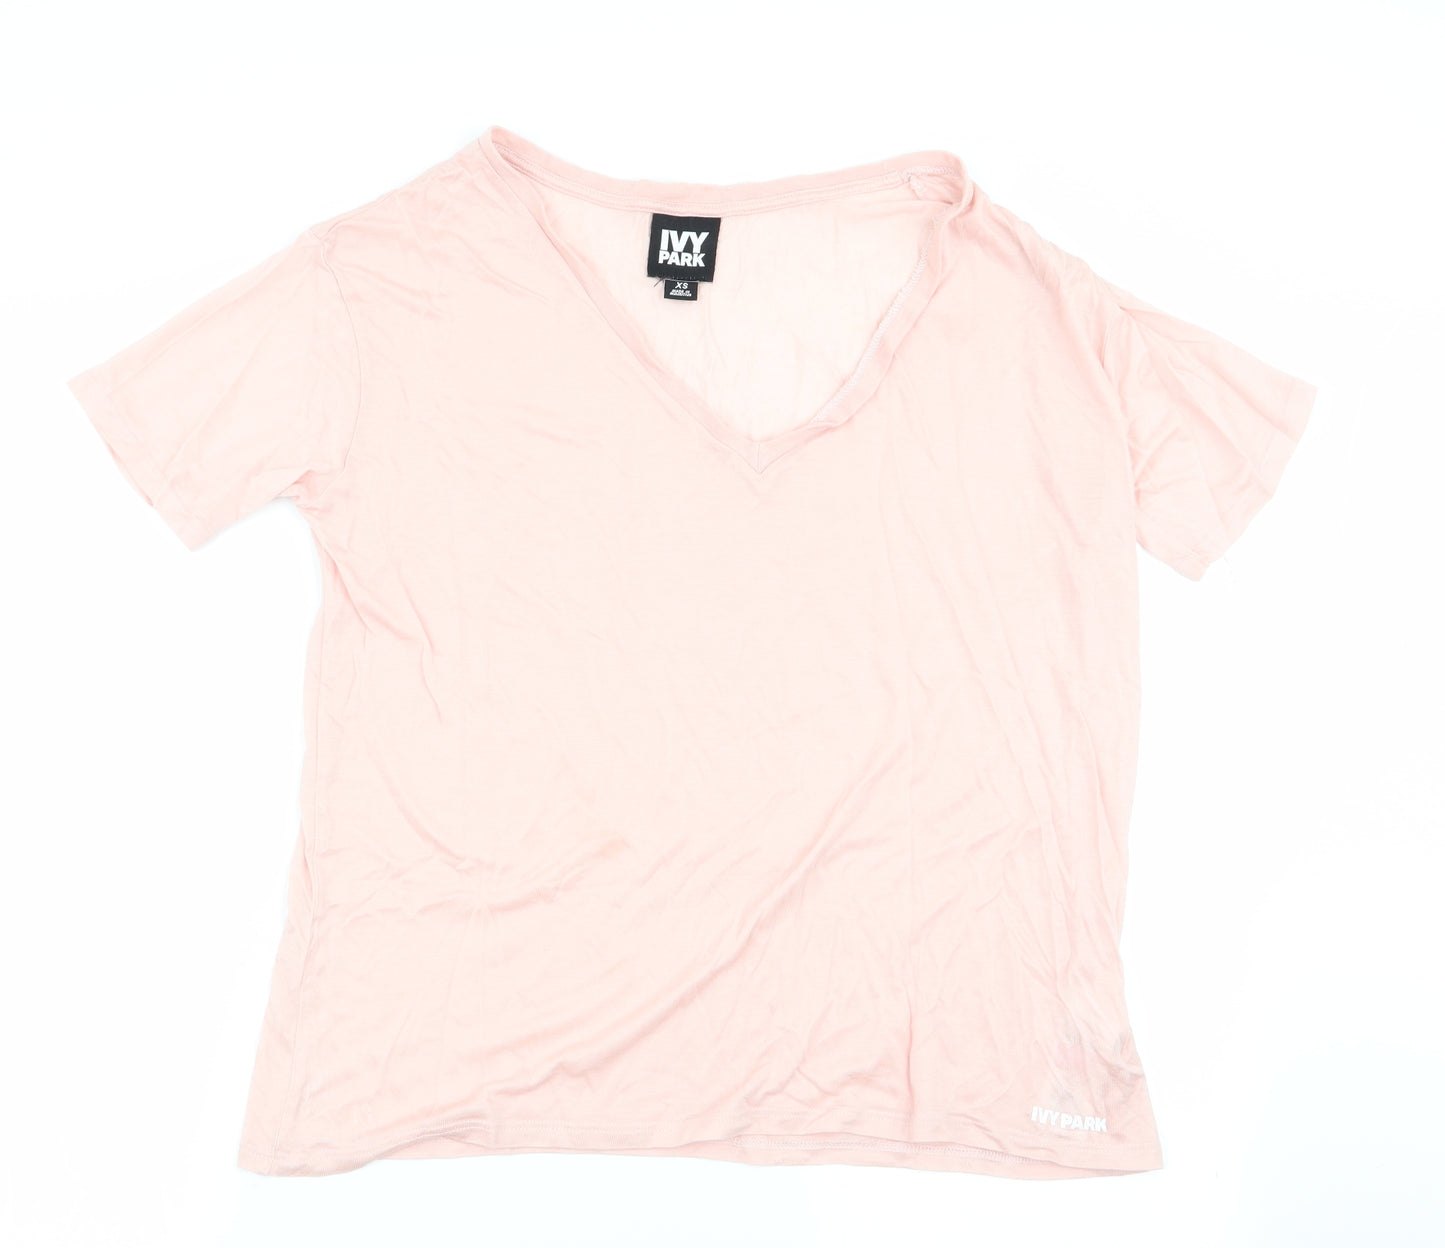 IVY PARK Womens Pink   Basic T-Shirt Size XS